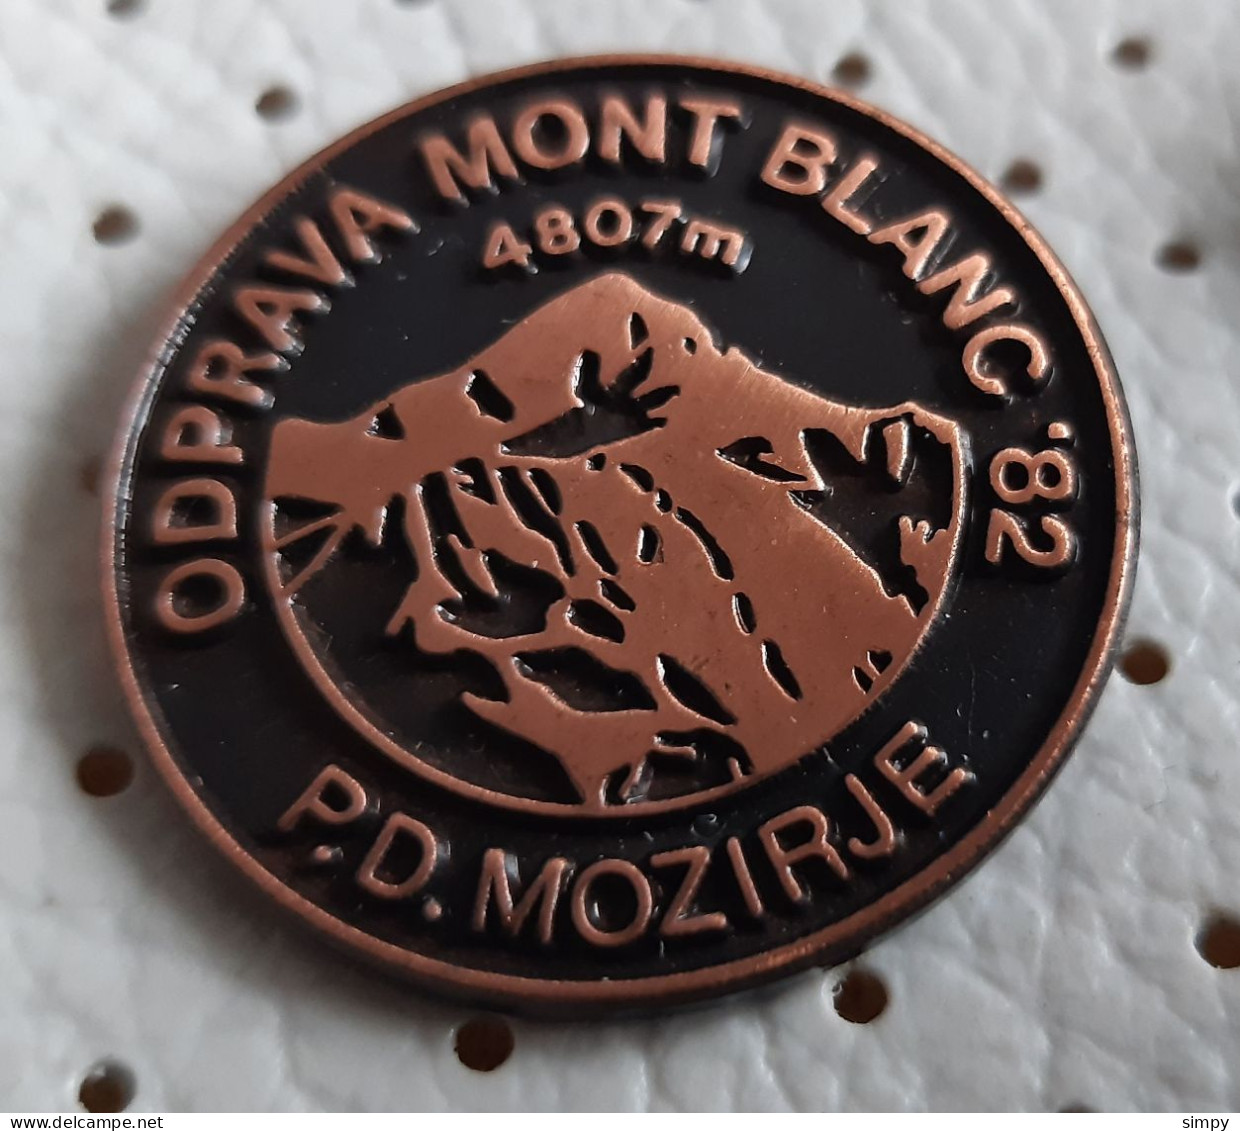 Yugoslav Expedition MONT BLANC 4807m  1982 PD Mozirje Slovenia Alpinism Mountaineering Pin - Alpinismus, Bergsteigen